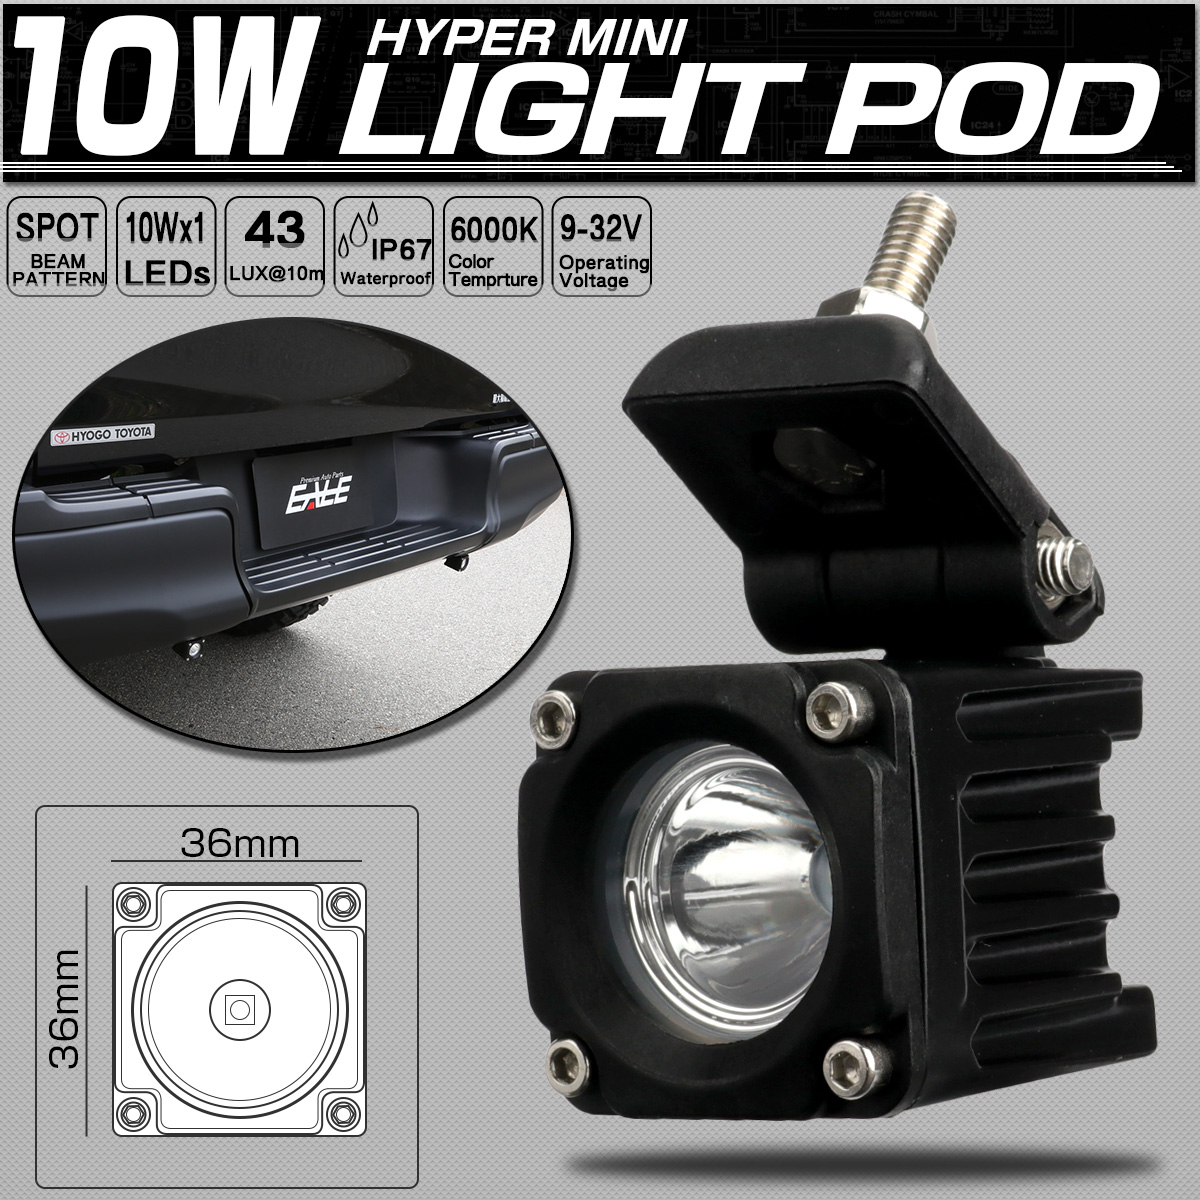 LED 作業灯 10W 超ミニ ライトポッド 12V 24V 防水IP67 小型 軽量 スポットライト P-536